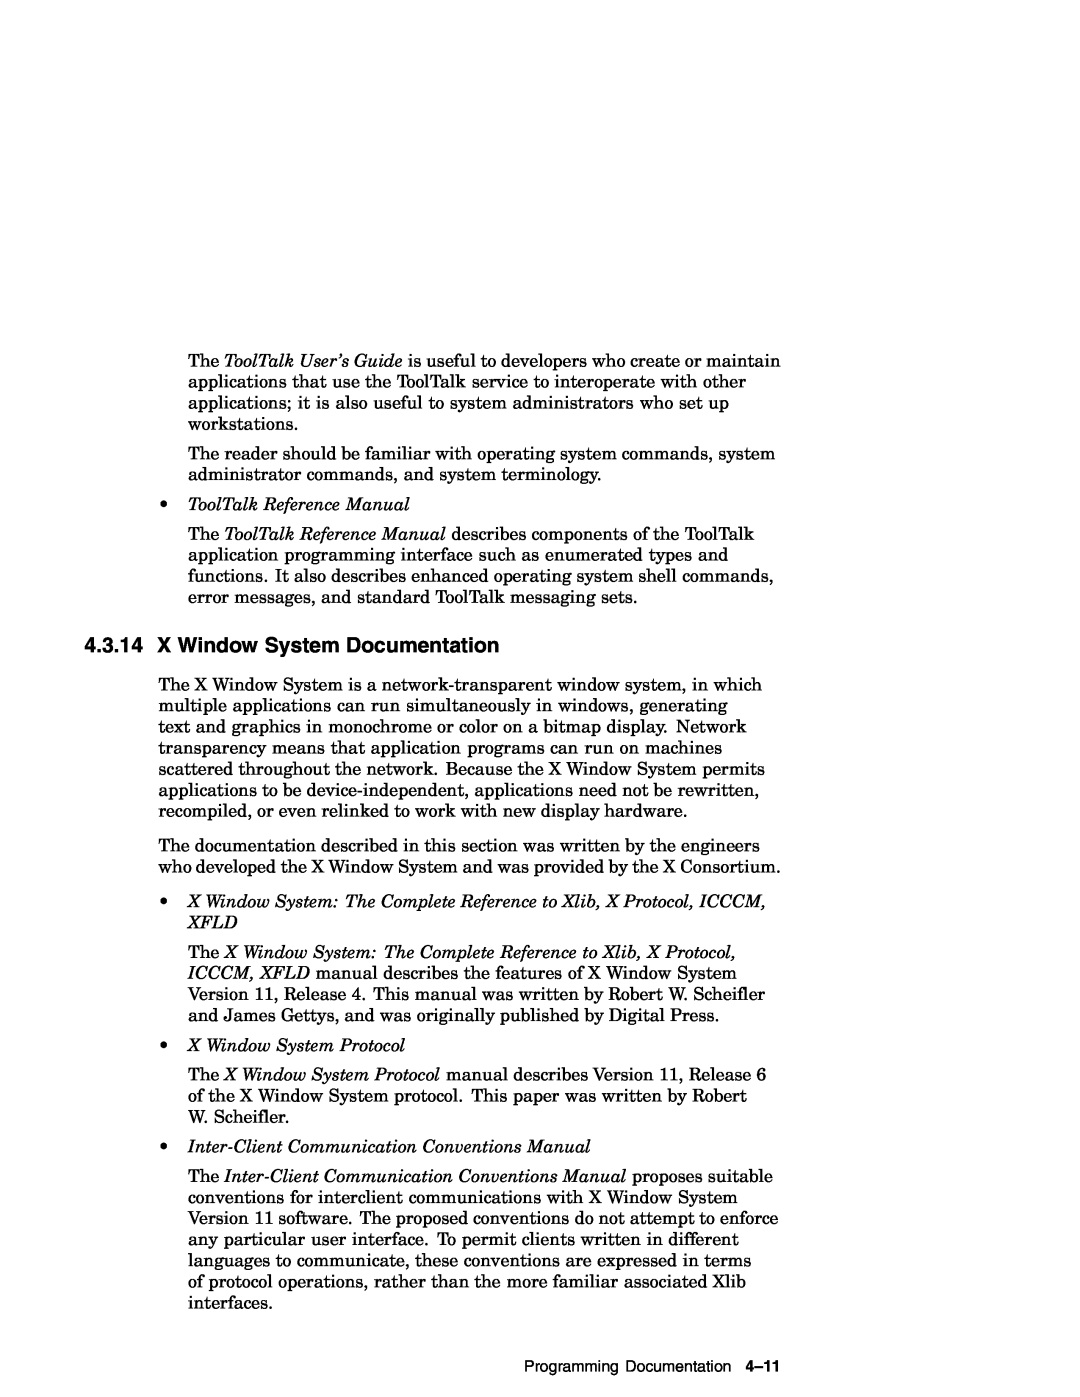 Compaq AA-RH8RD-TE manual X Window System Documentation, ToolTalk Reference Manual, X Window System Protocol 